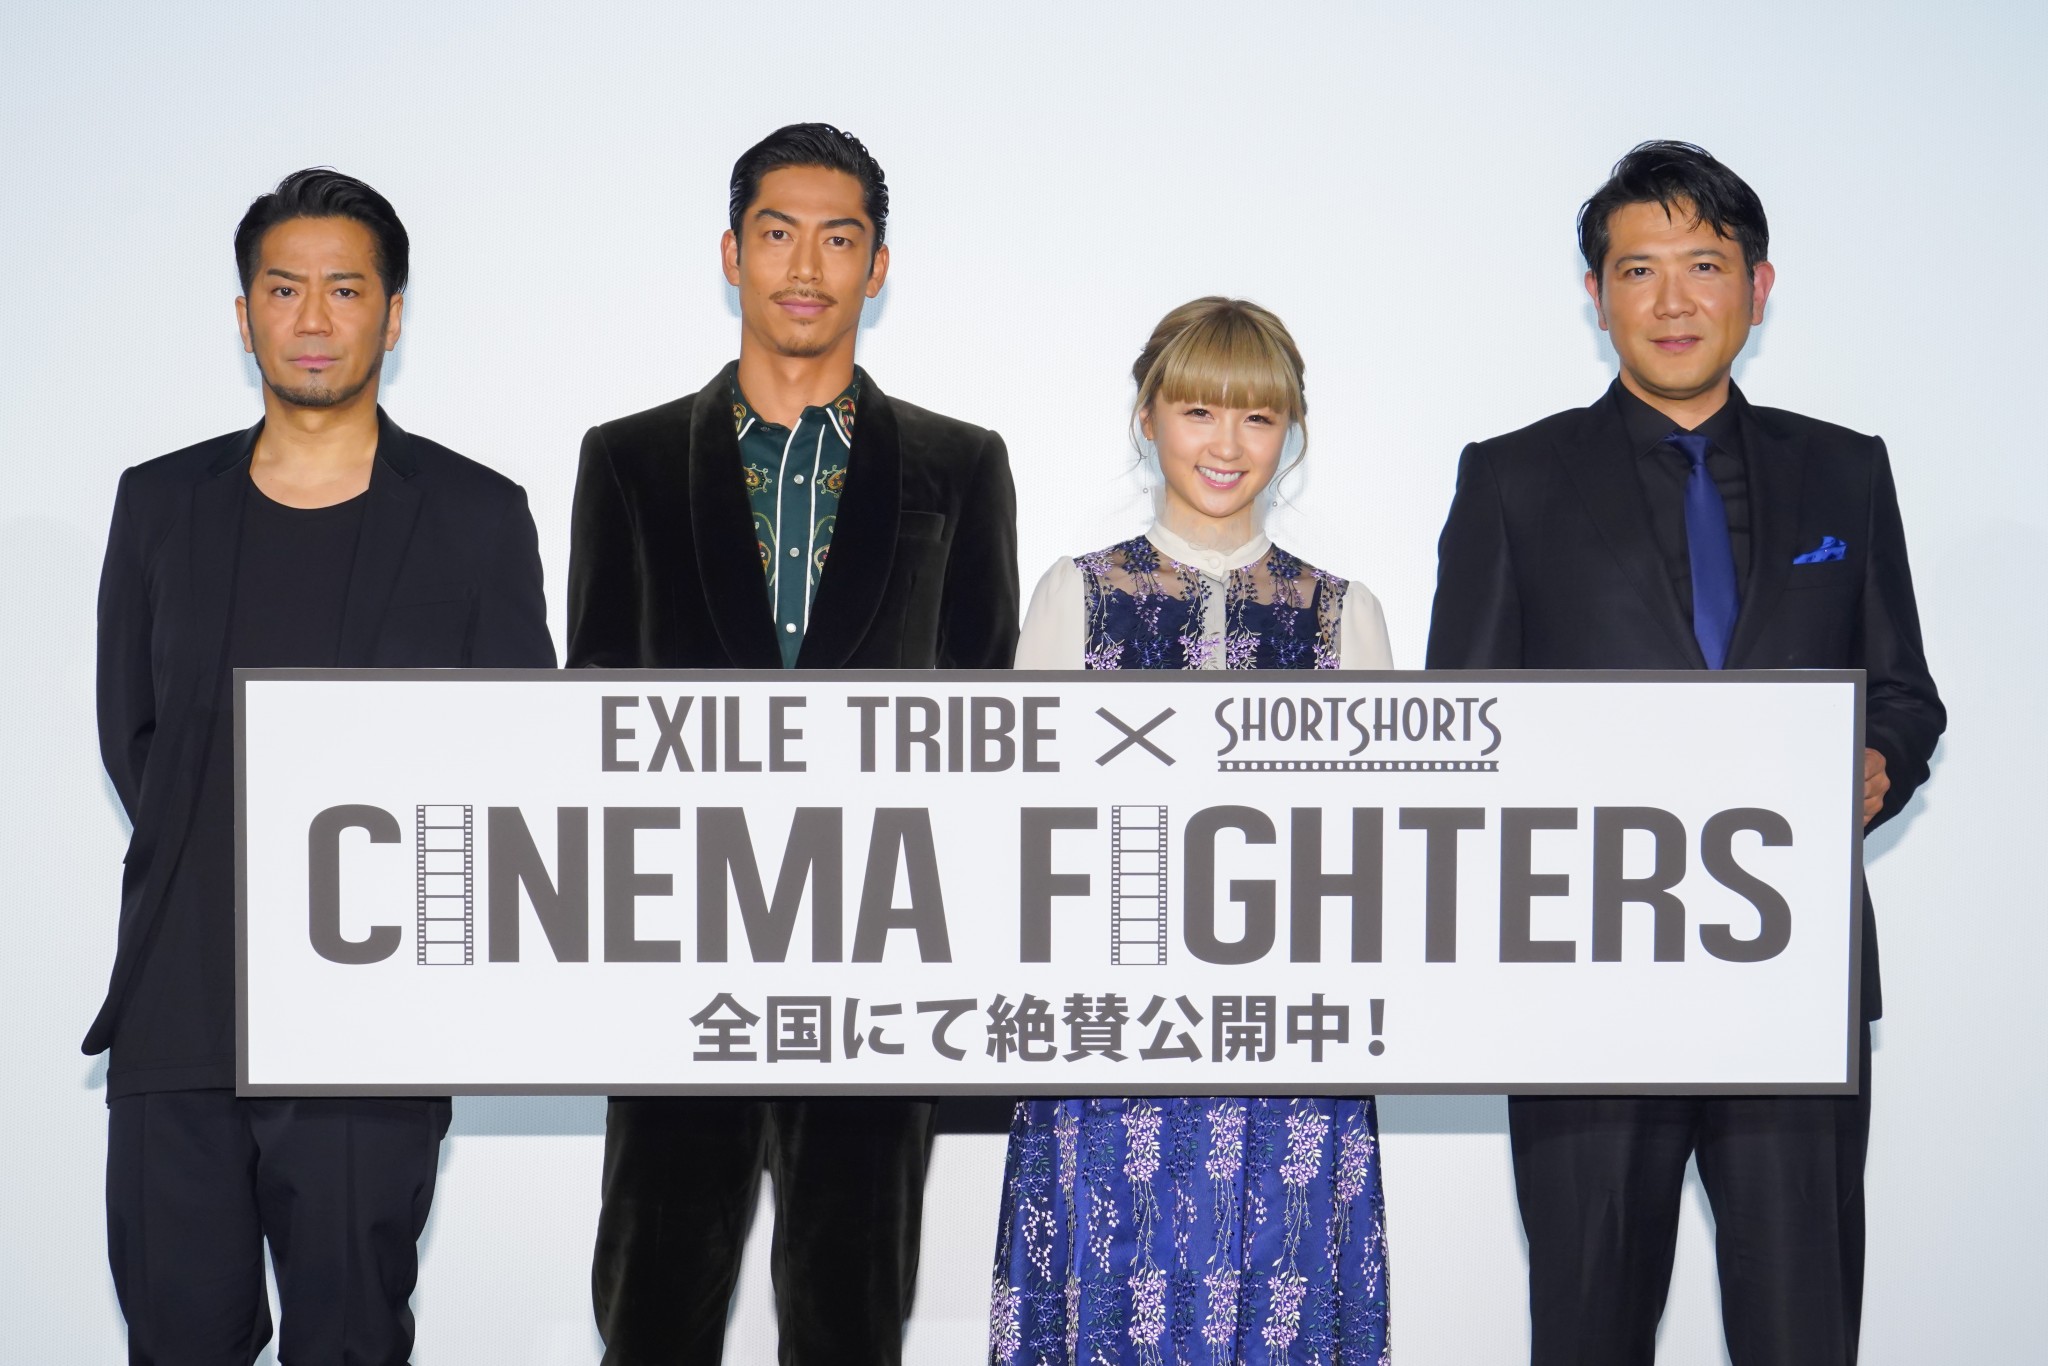 CINEMA FIGHTERS project 第2弾『ウタモノガタリ』公開